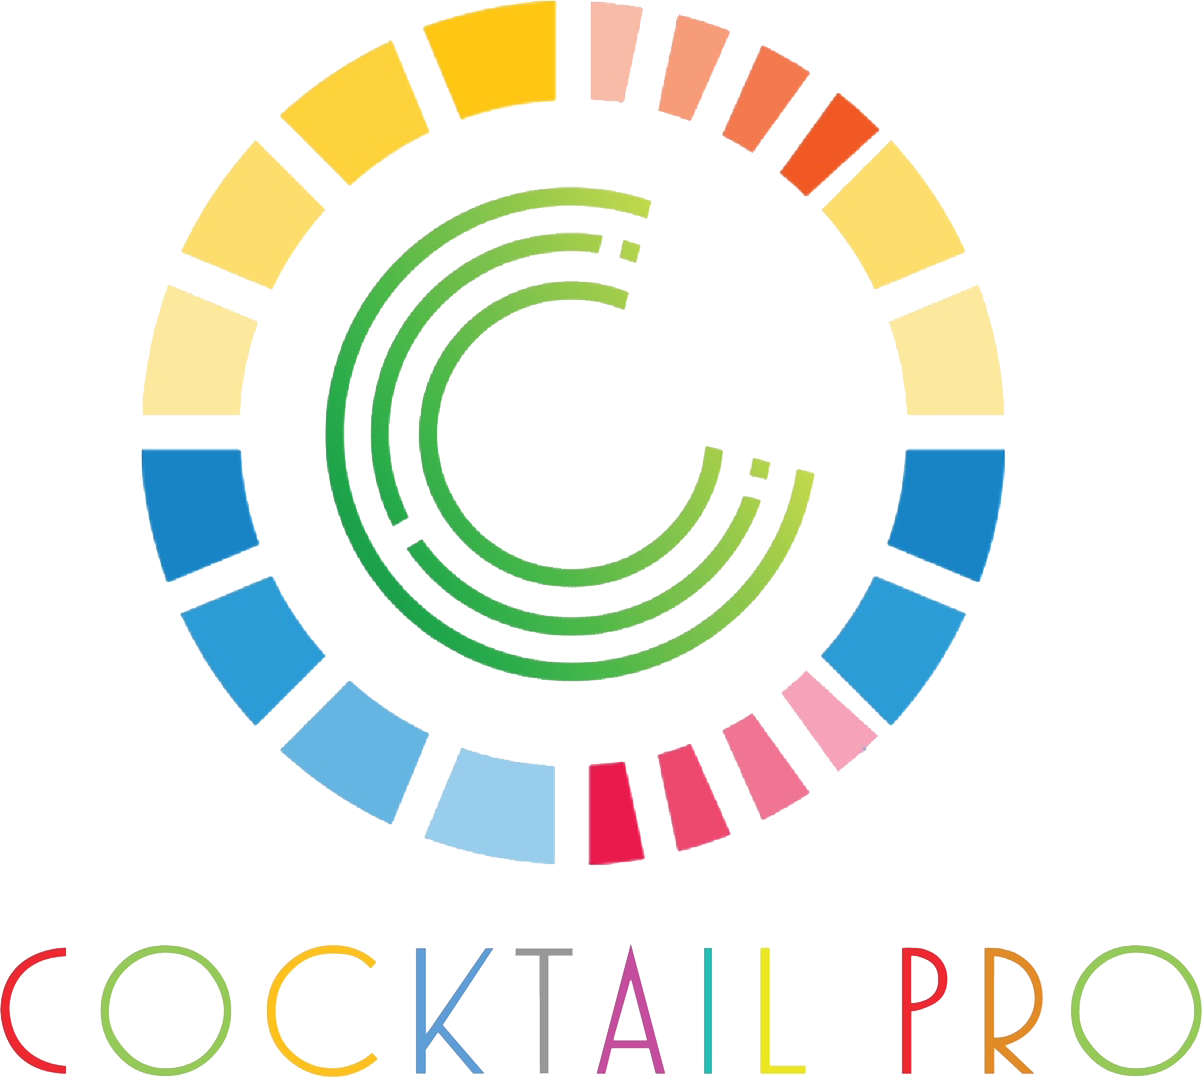 Cocktail Pro - Logo